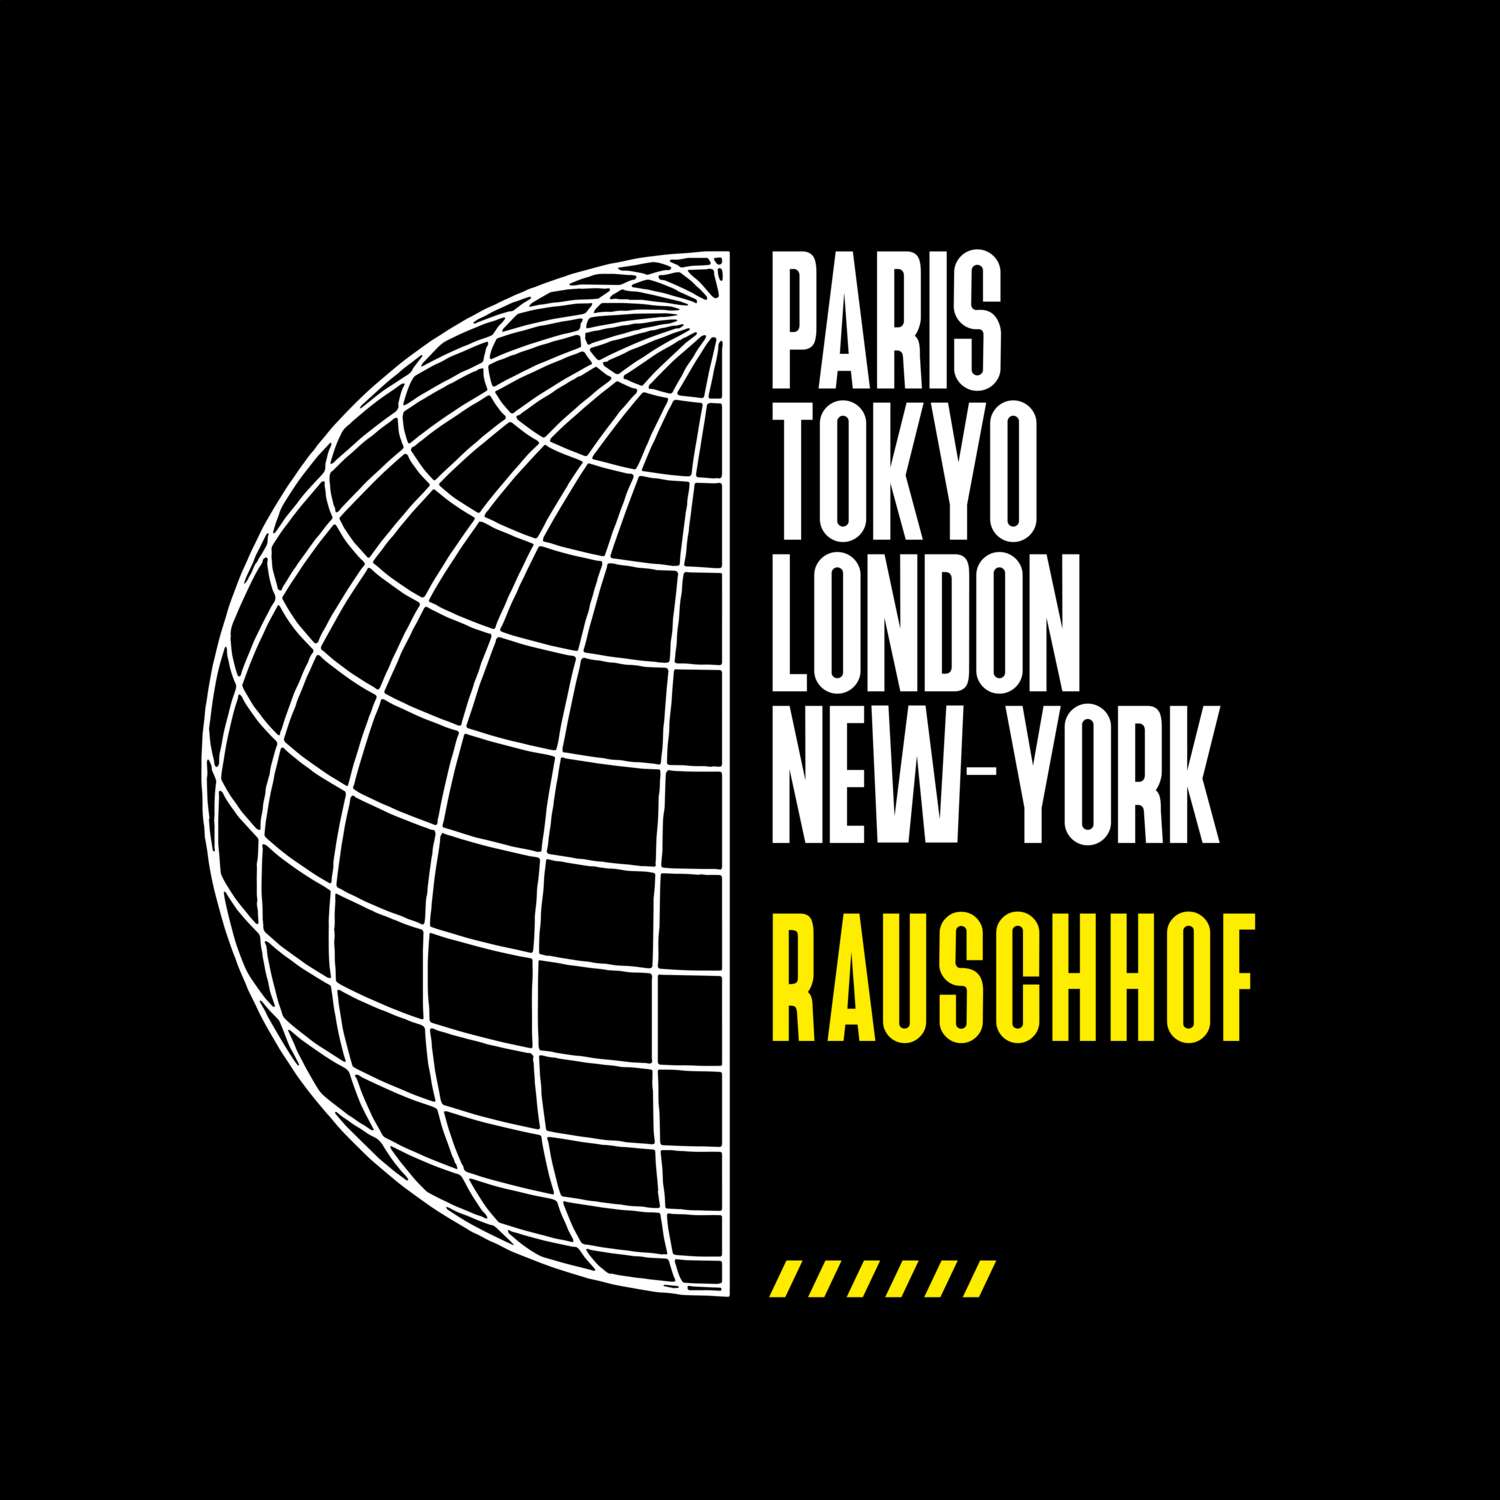 Rauschhof T-Shirt »Paris Tokyo London«